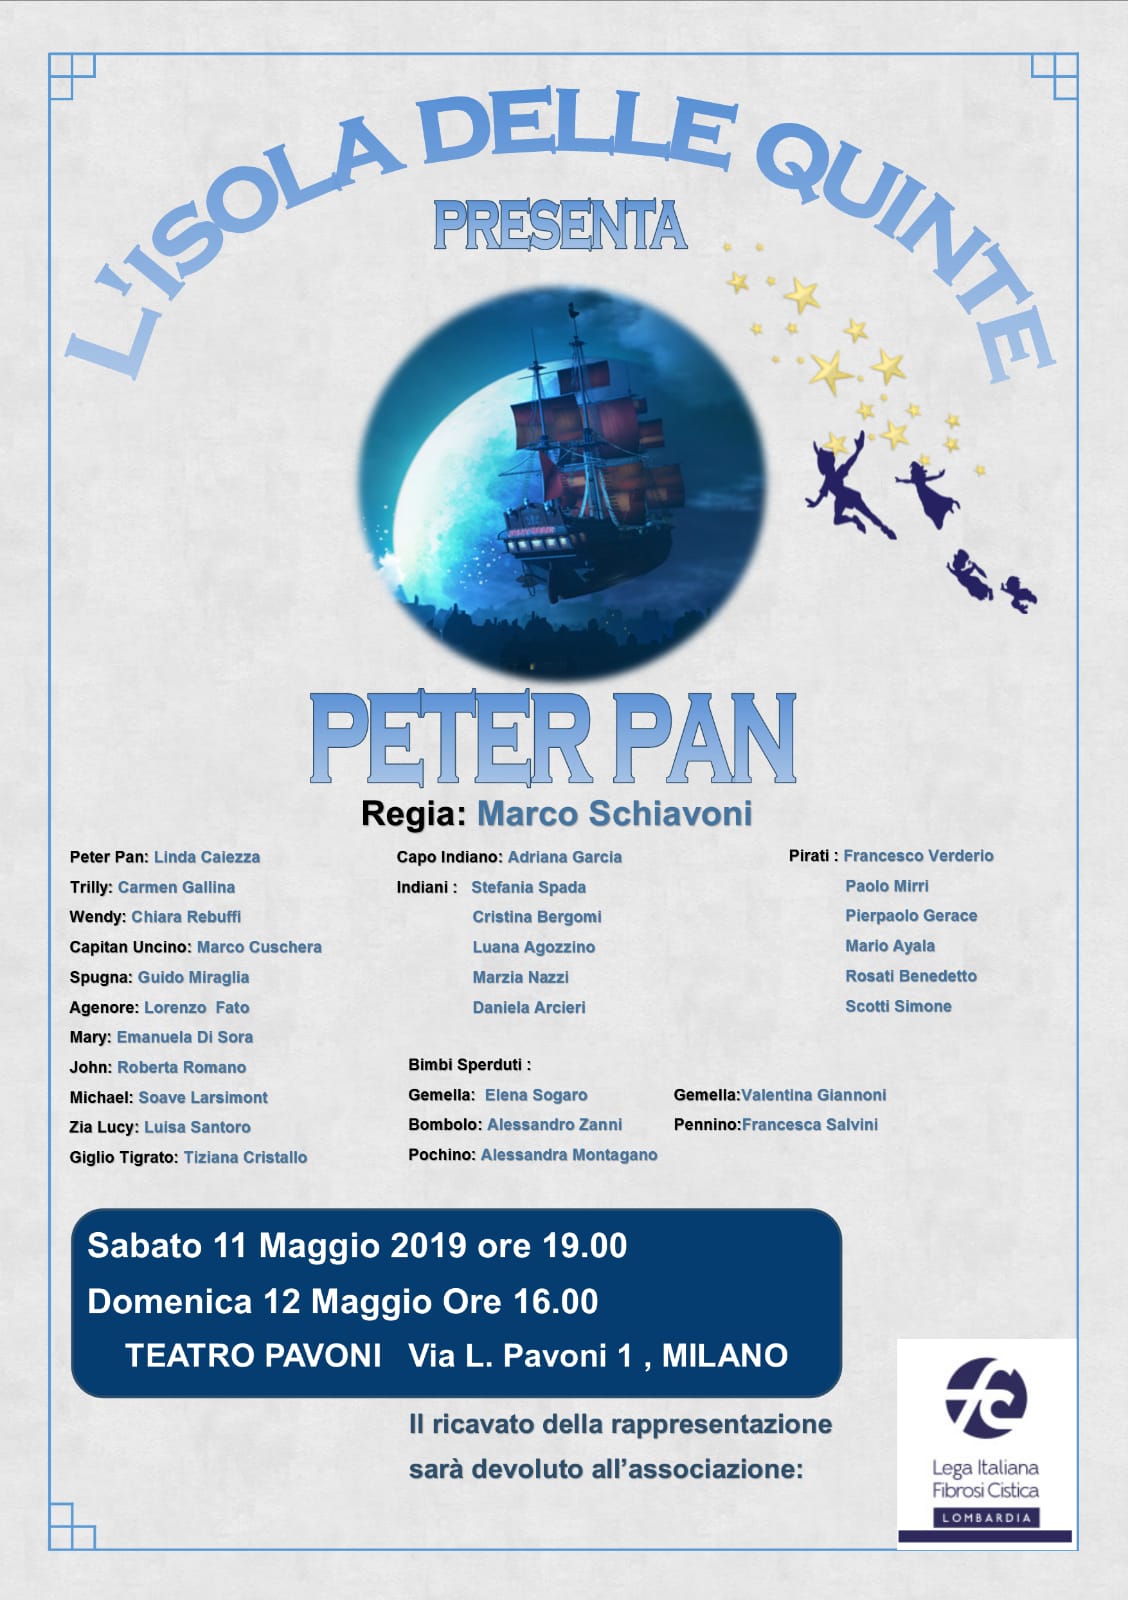 Peter Pan - teatro delle Quinte